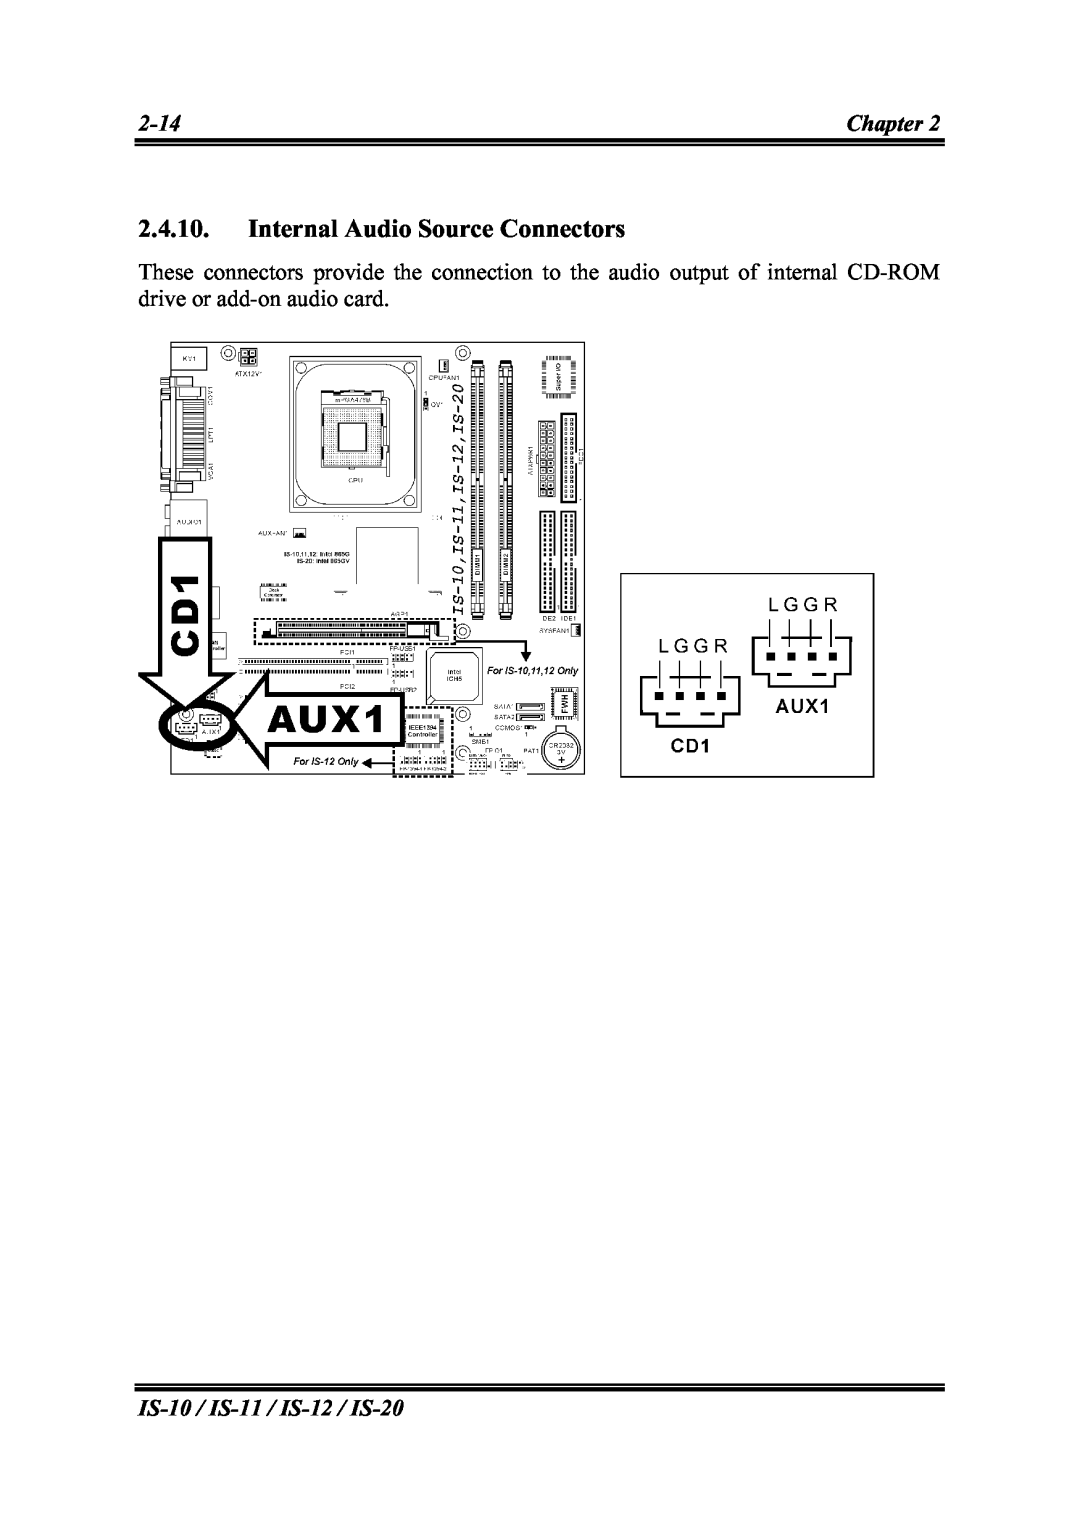 Abit user manual Internal Audio Source Connectors, IS-10 / IS-11 / IS-12 / IS-20 